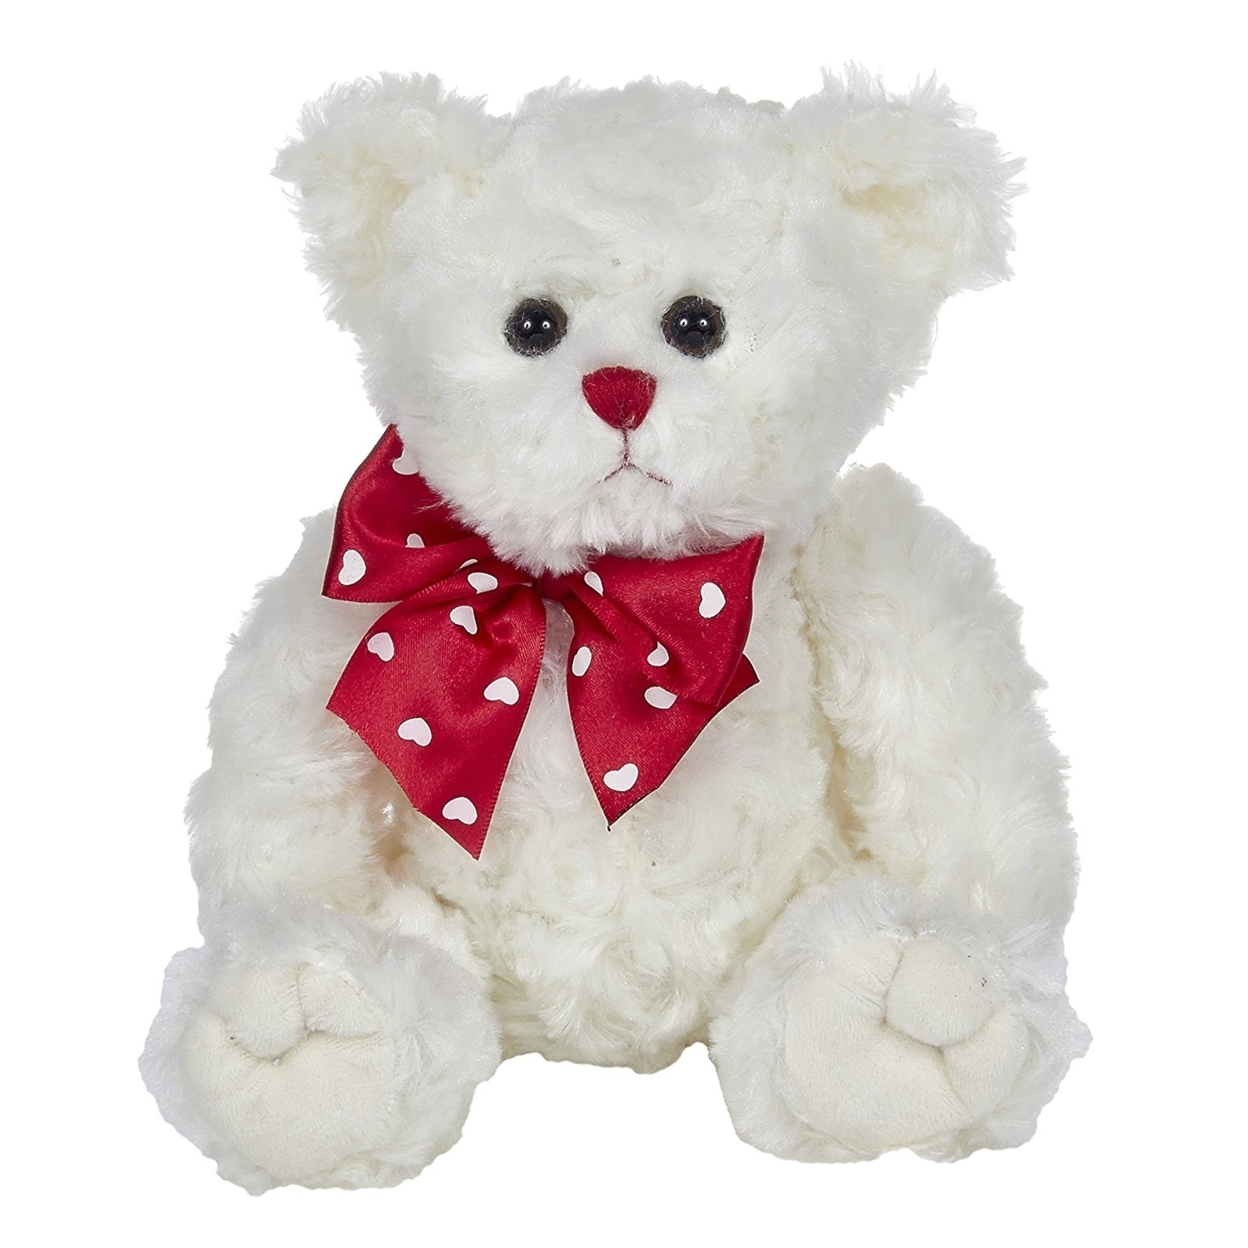 Bearington Lil' Lovable Valentine's Day Plush Stuffed Animal Teddy Bear, Gift For Birthday, Christmas Gift For Mom, Girlfriend, Wife (White)